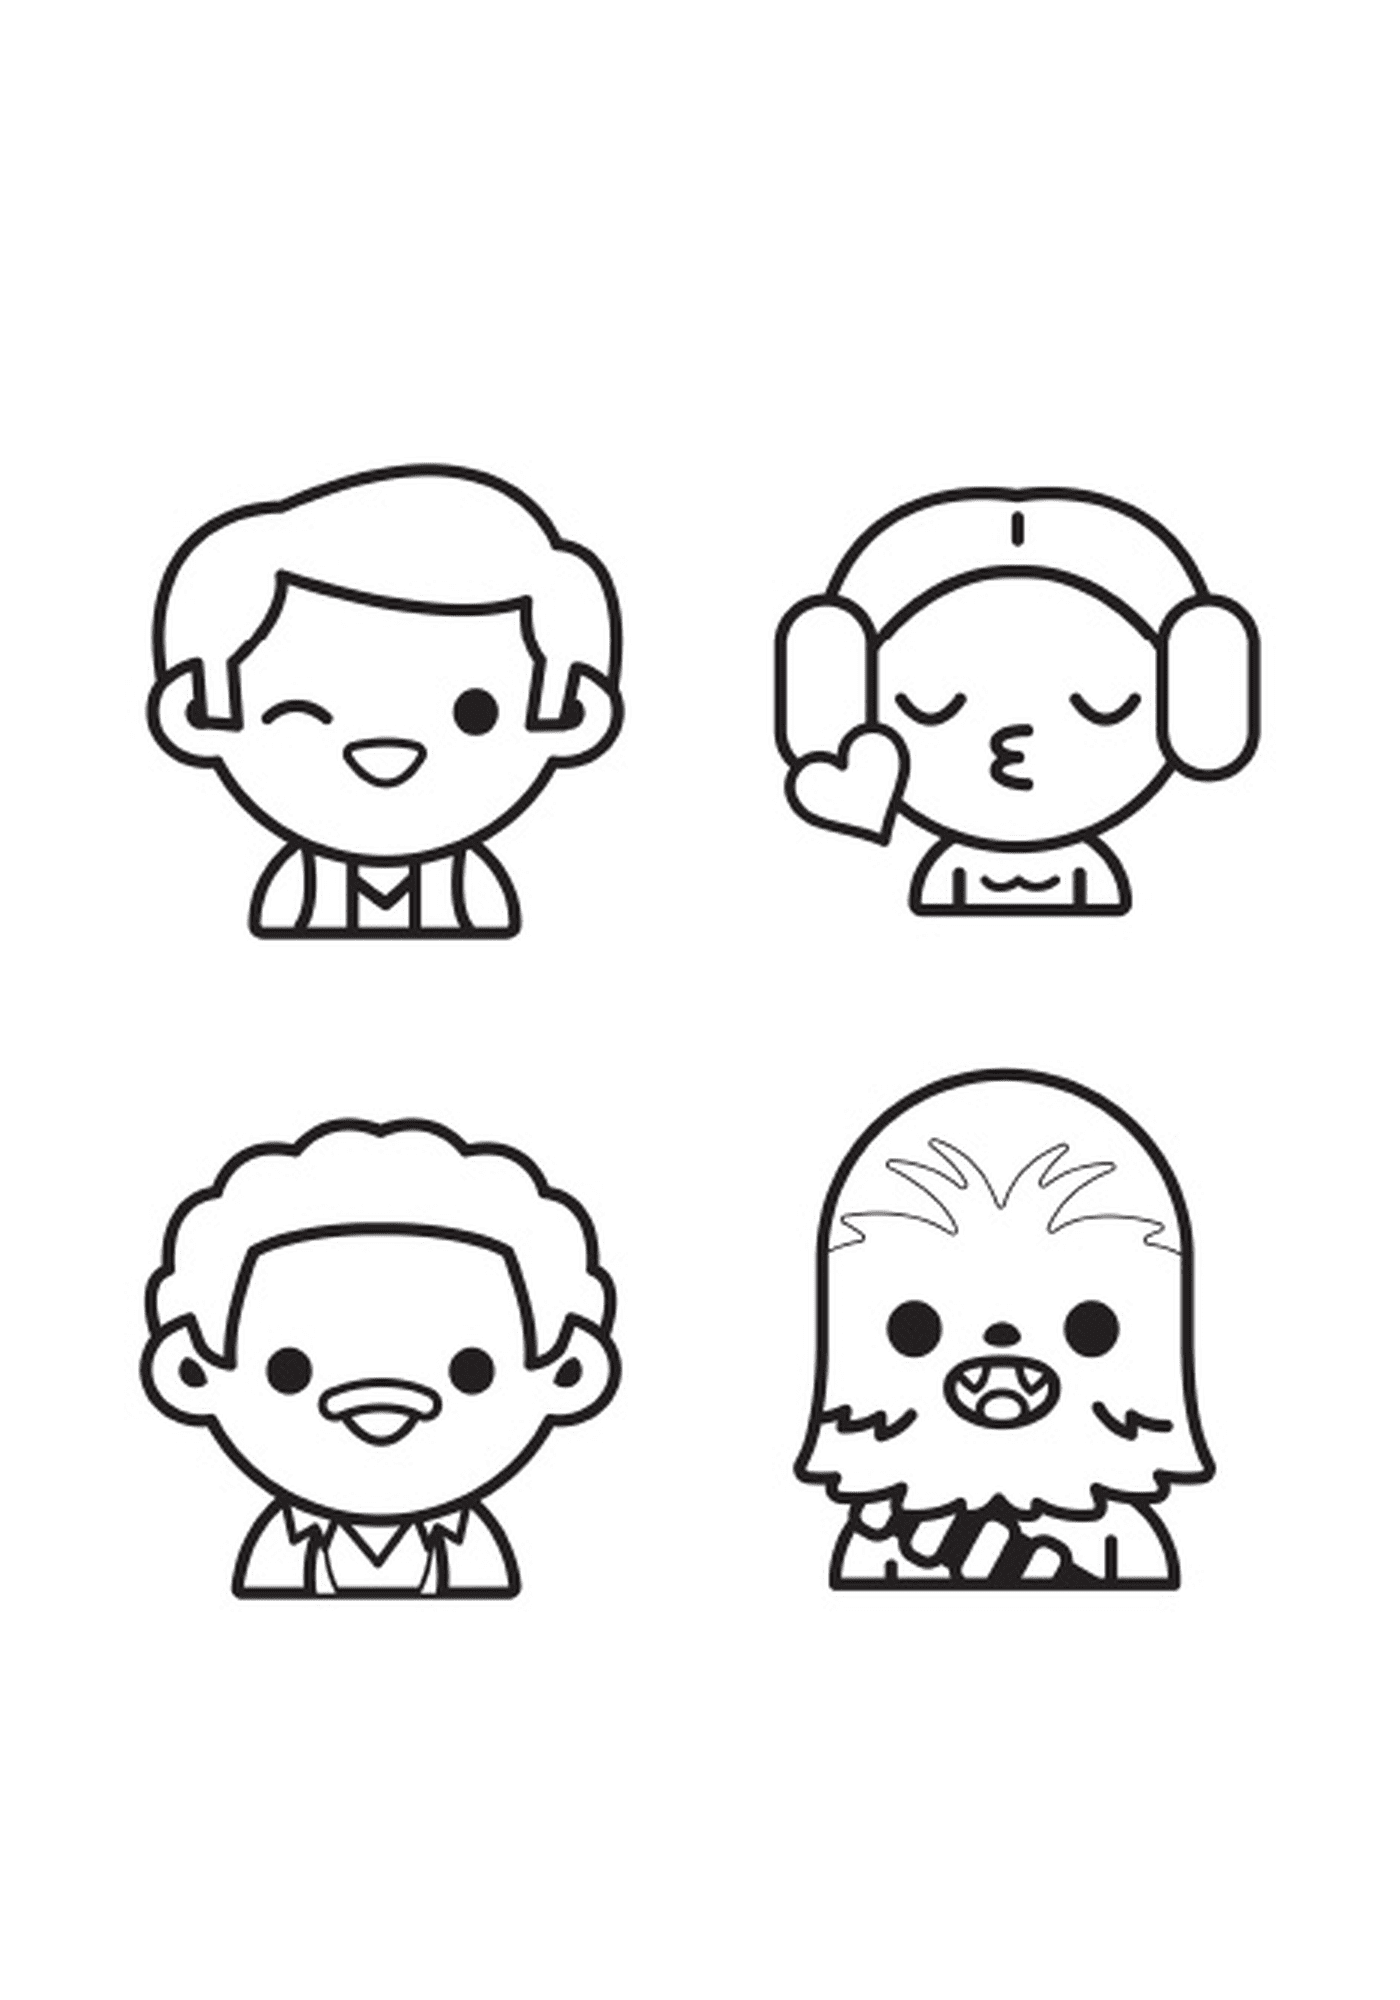  Star Wars Animated Character Set 